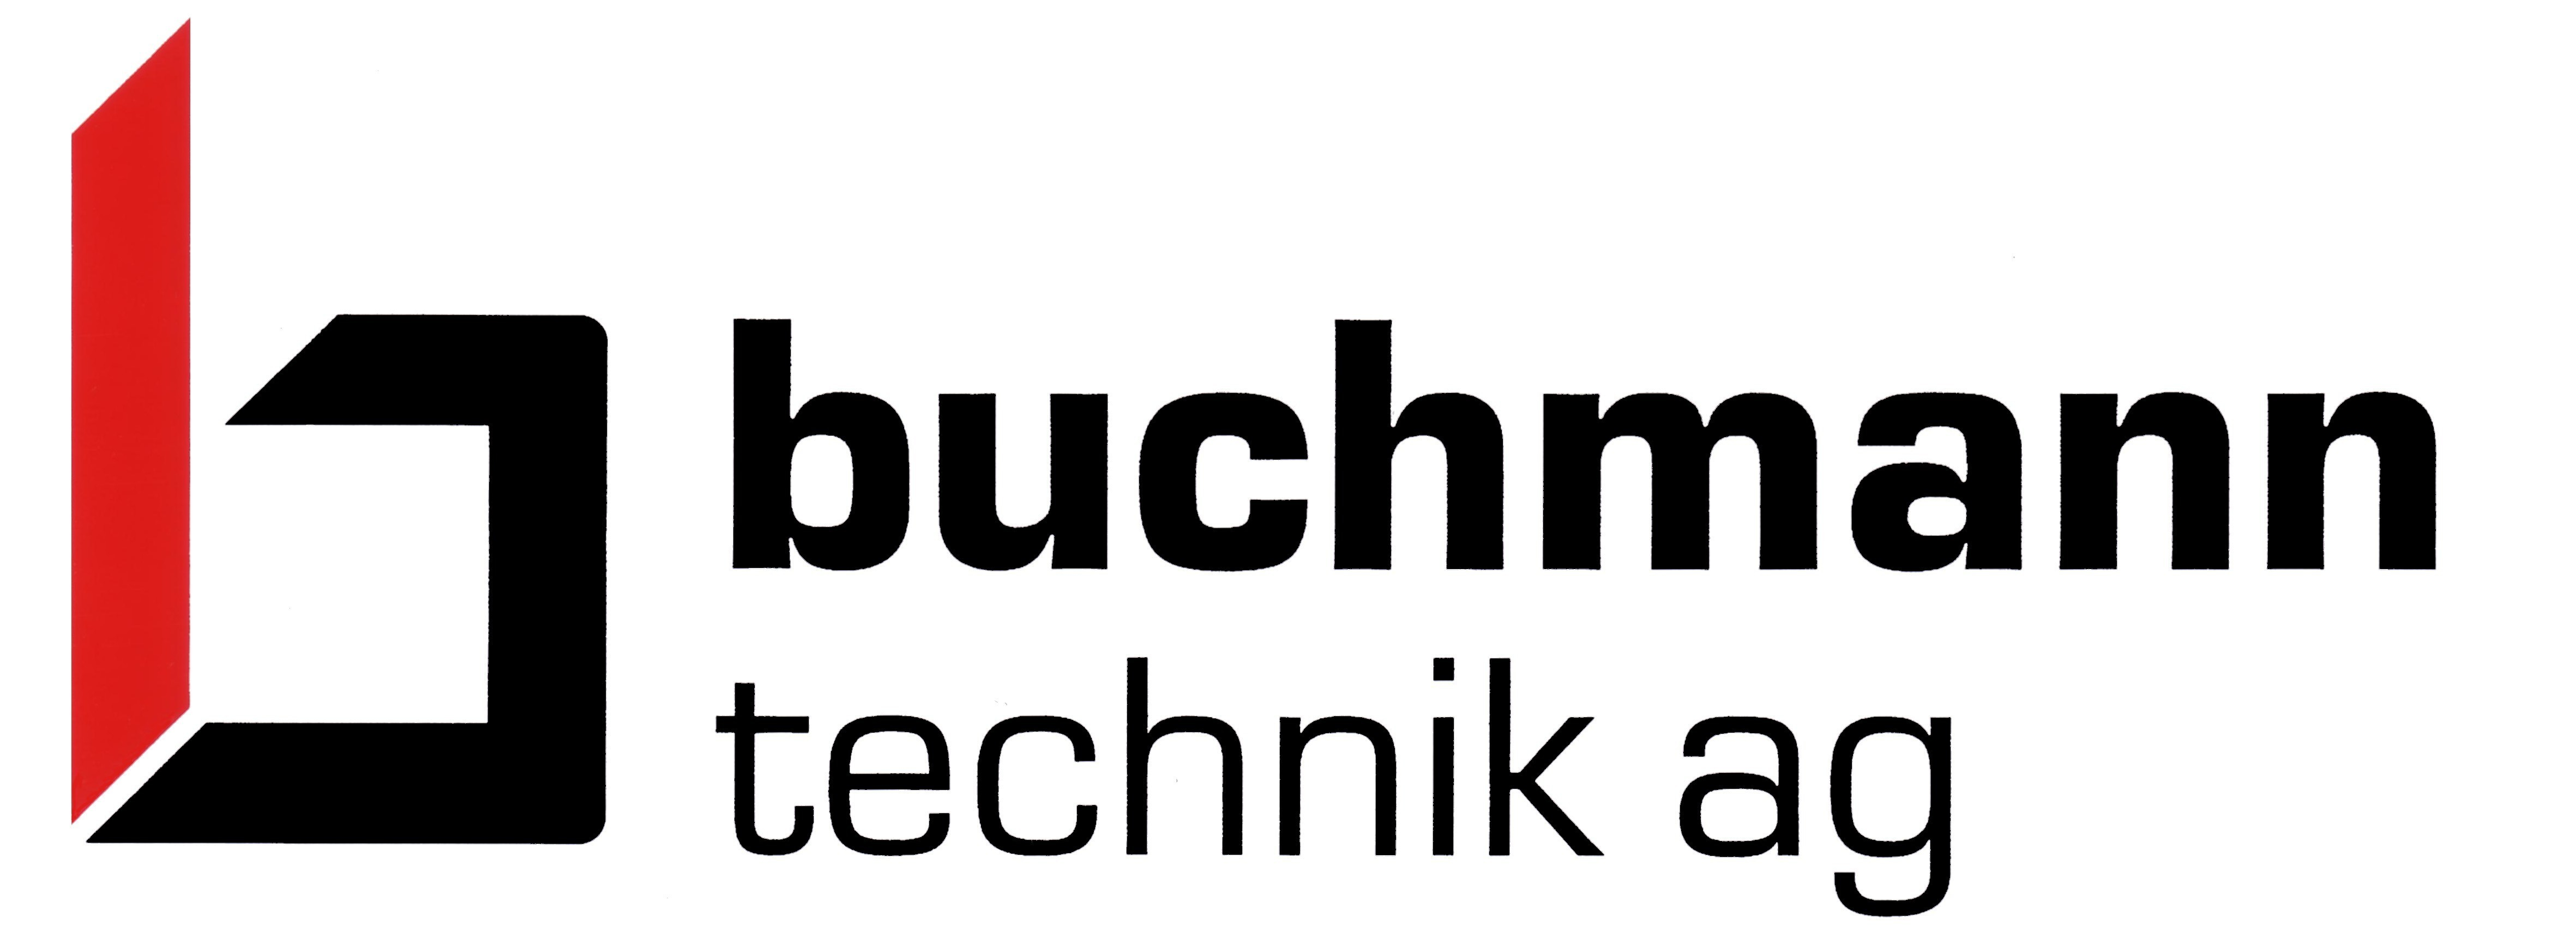 SSE-Eschenbach Sponsoren Buchmann Technik AG